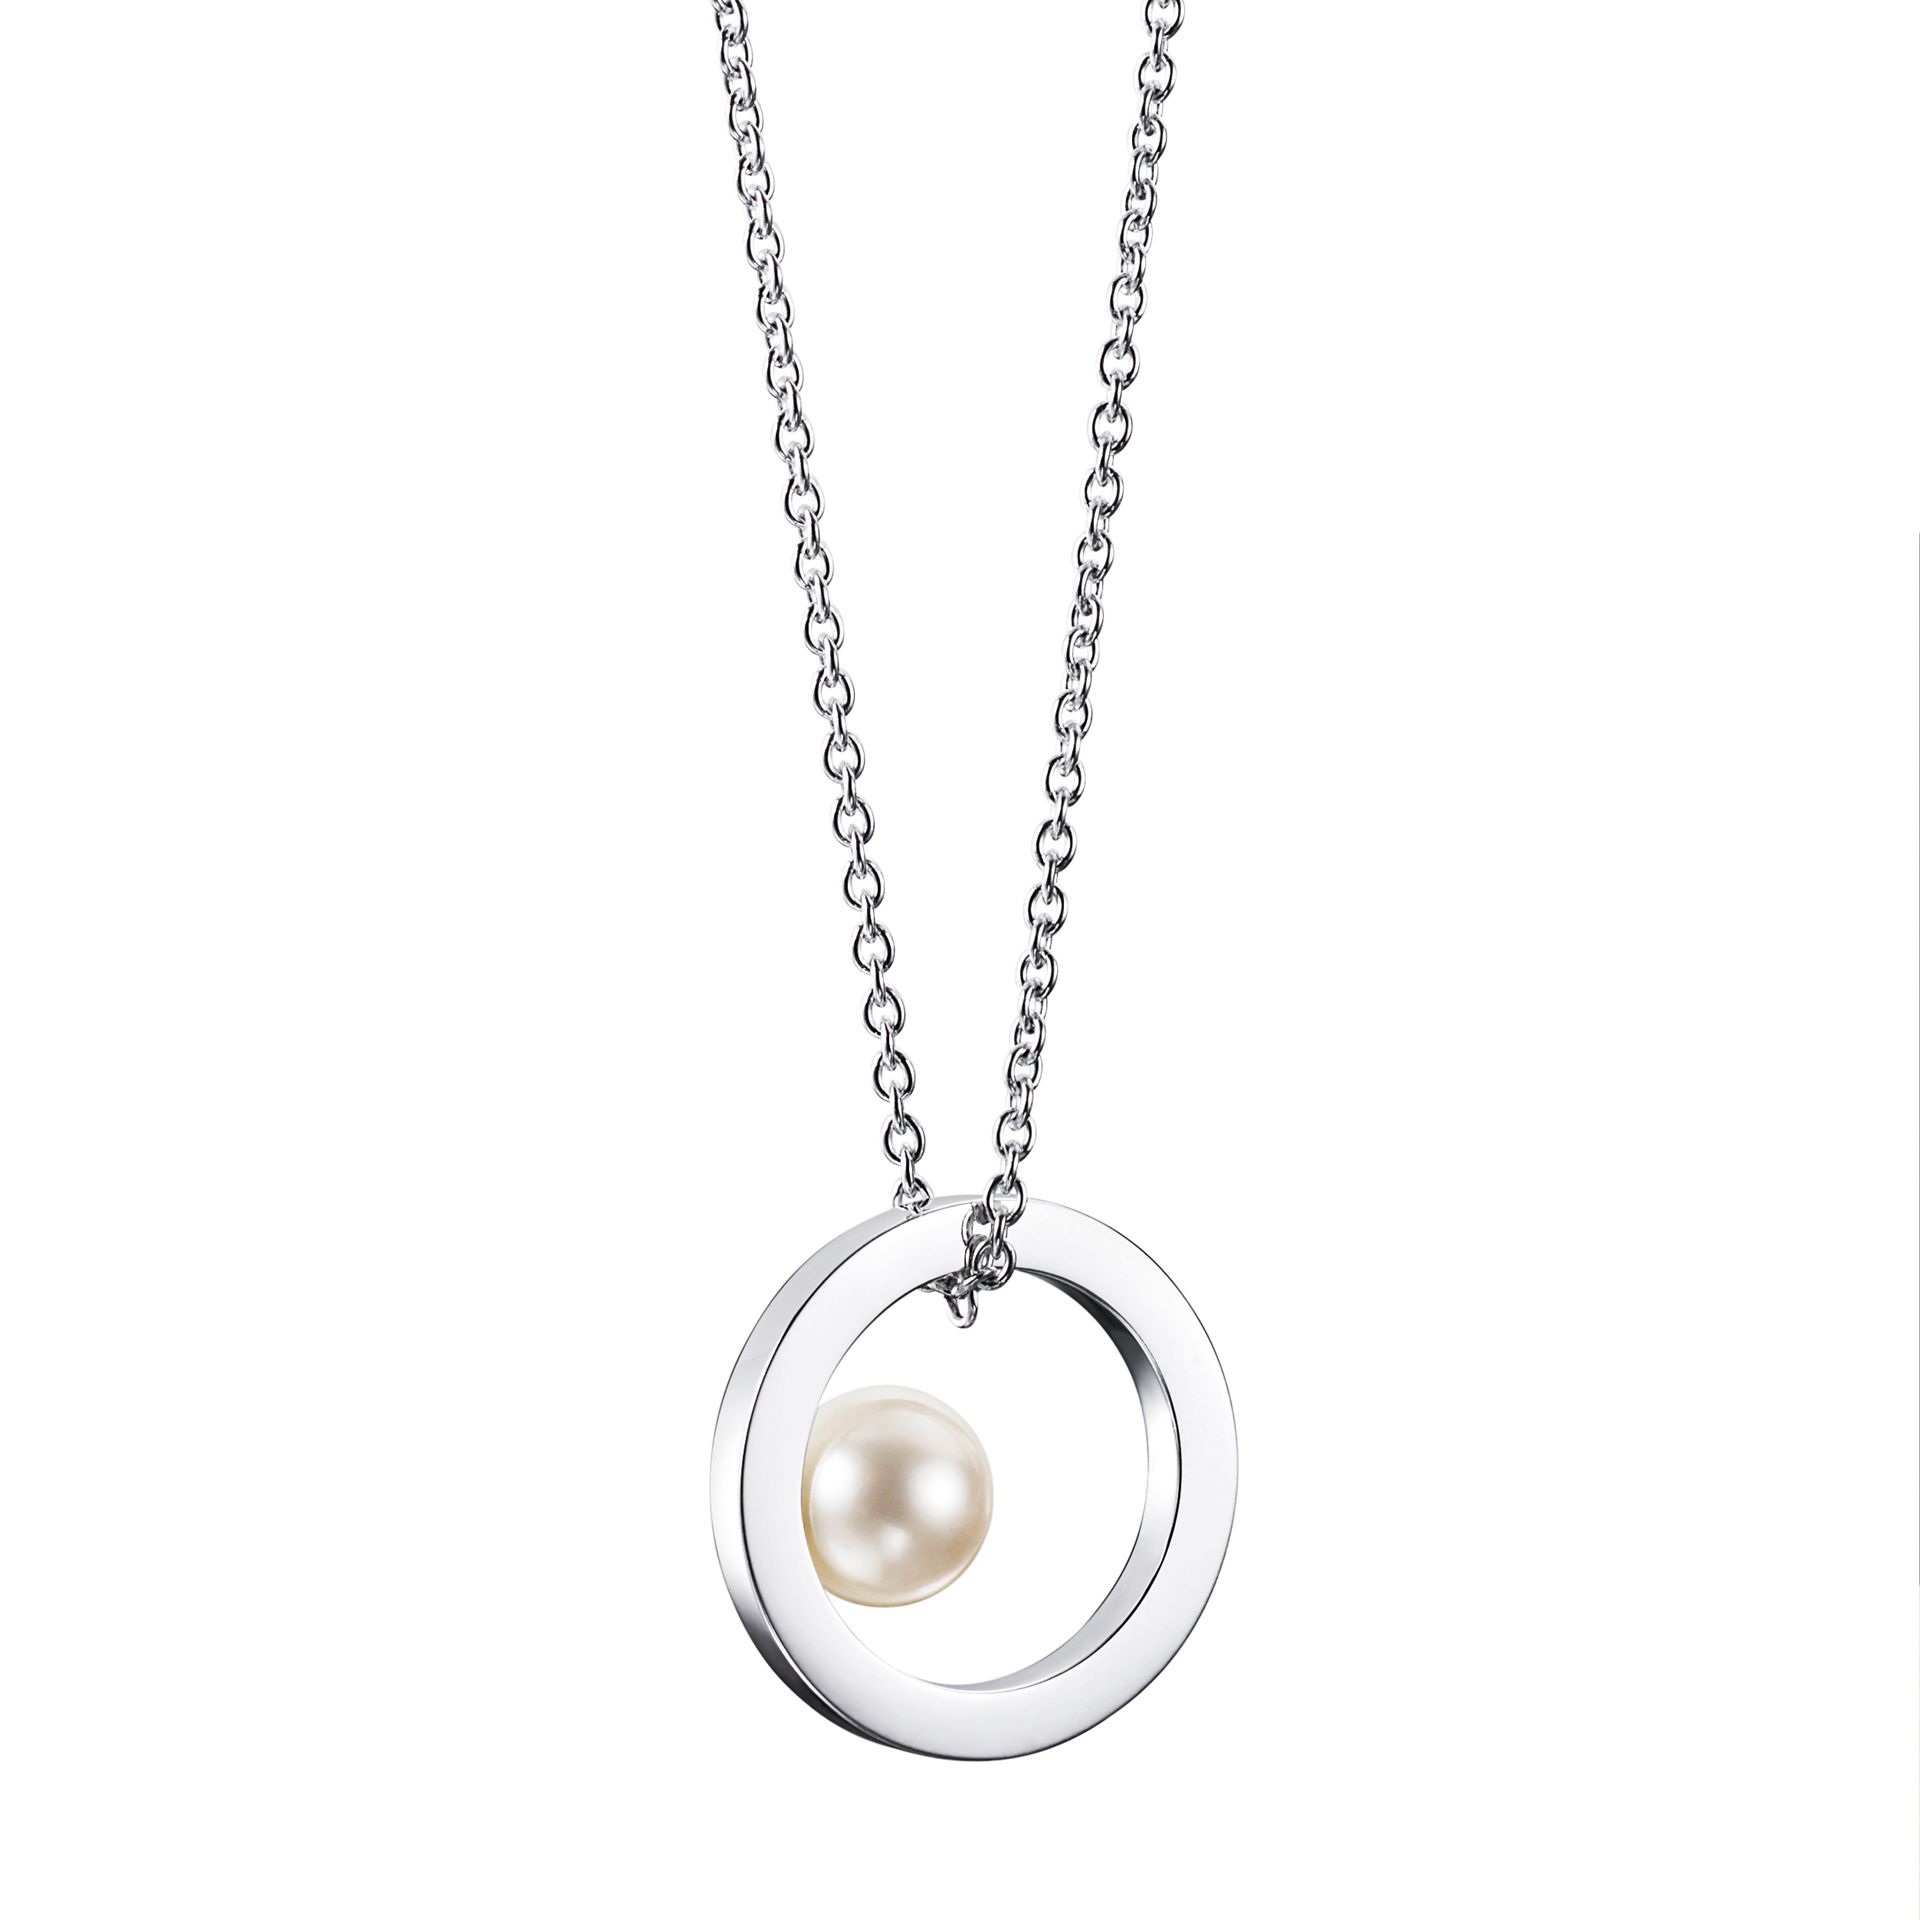 Efva Attling 60's Pearl Long Necklace 80 CM - SILVER